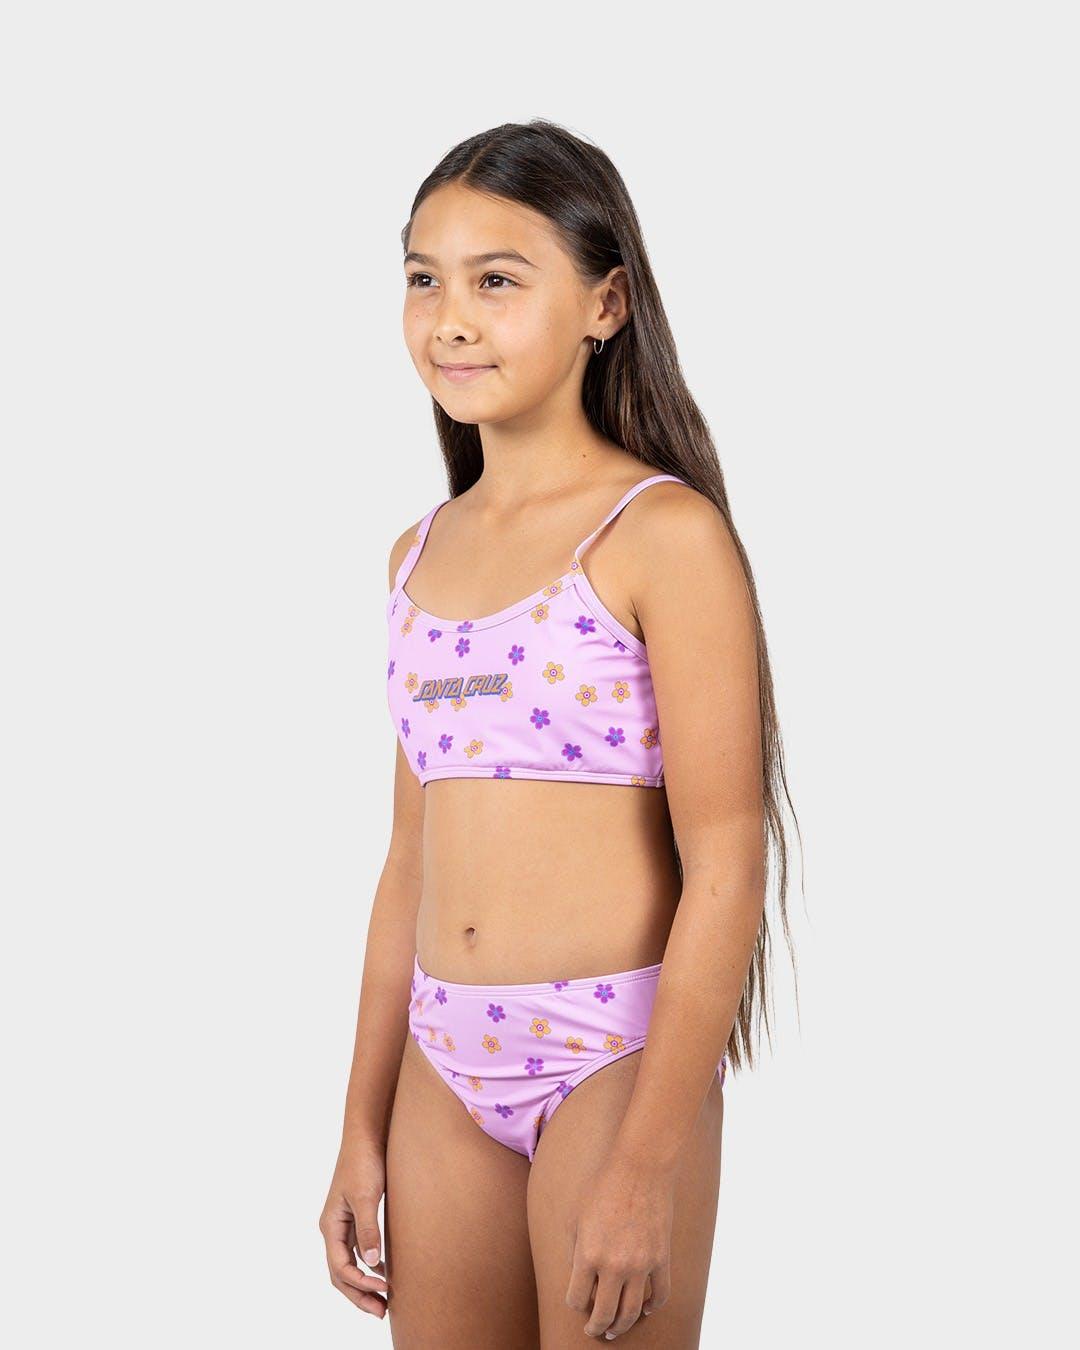 Classic Strip Bloom Santa Cruz Girls Bikini Set | SANTA CRUZ | Beachin Surf